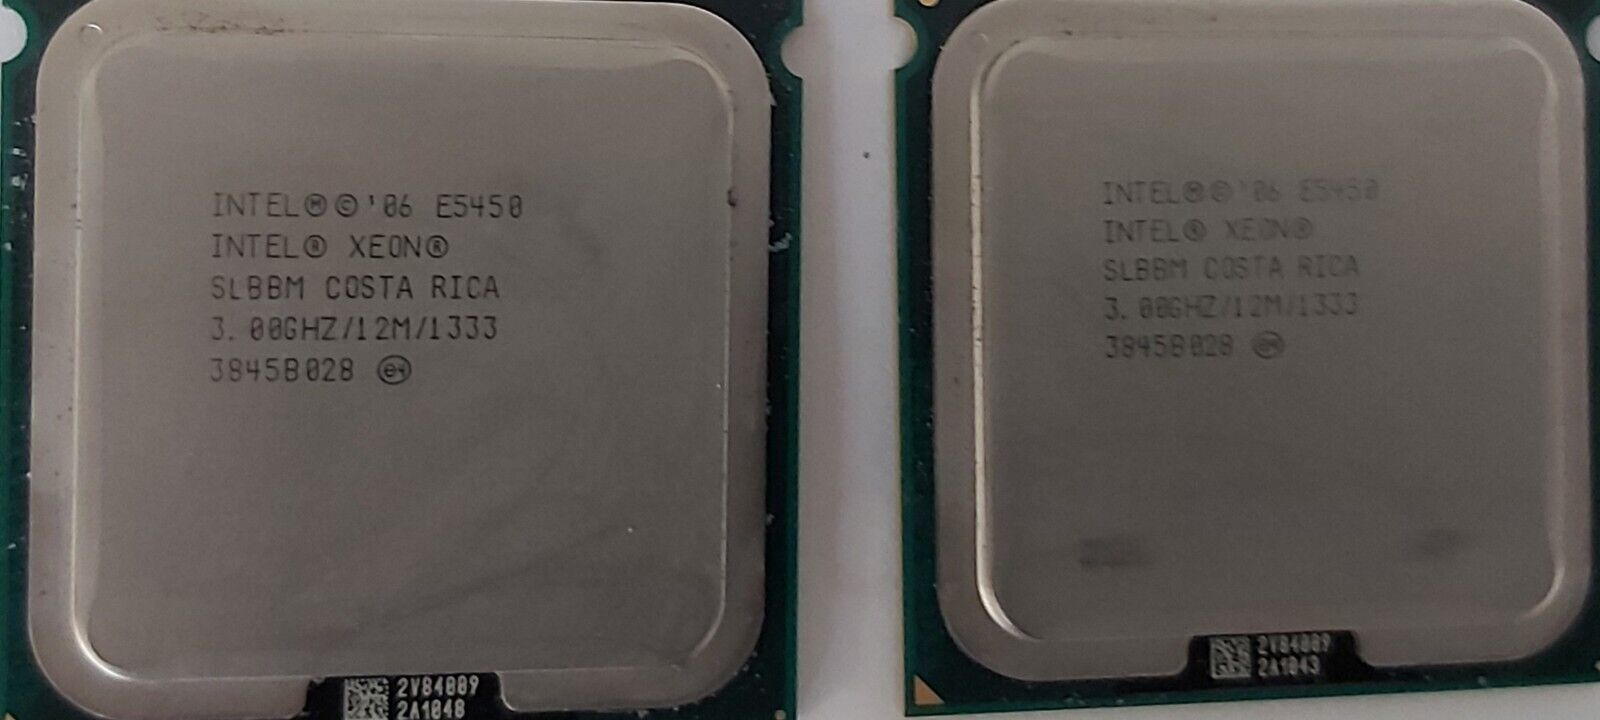 2 x Intel Xeon E5450 3.0Ghz Quad Core SLBBM CPU  1333 MHz  SERVER CPU USE